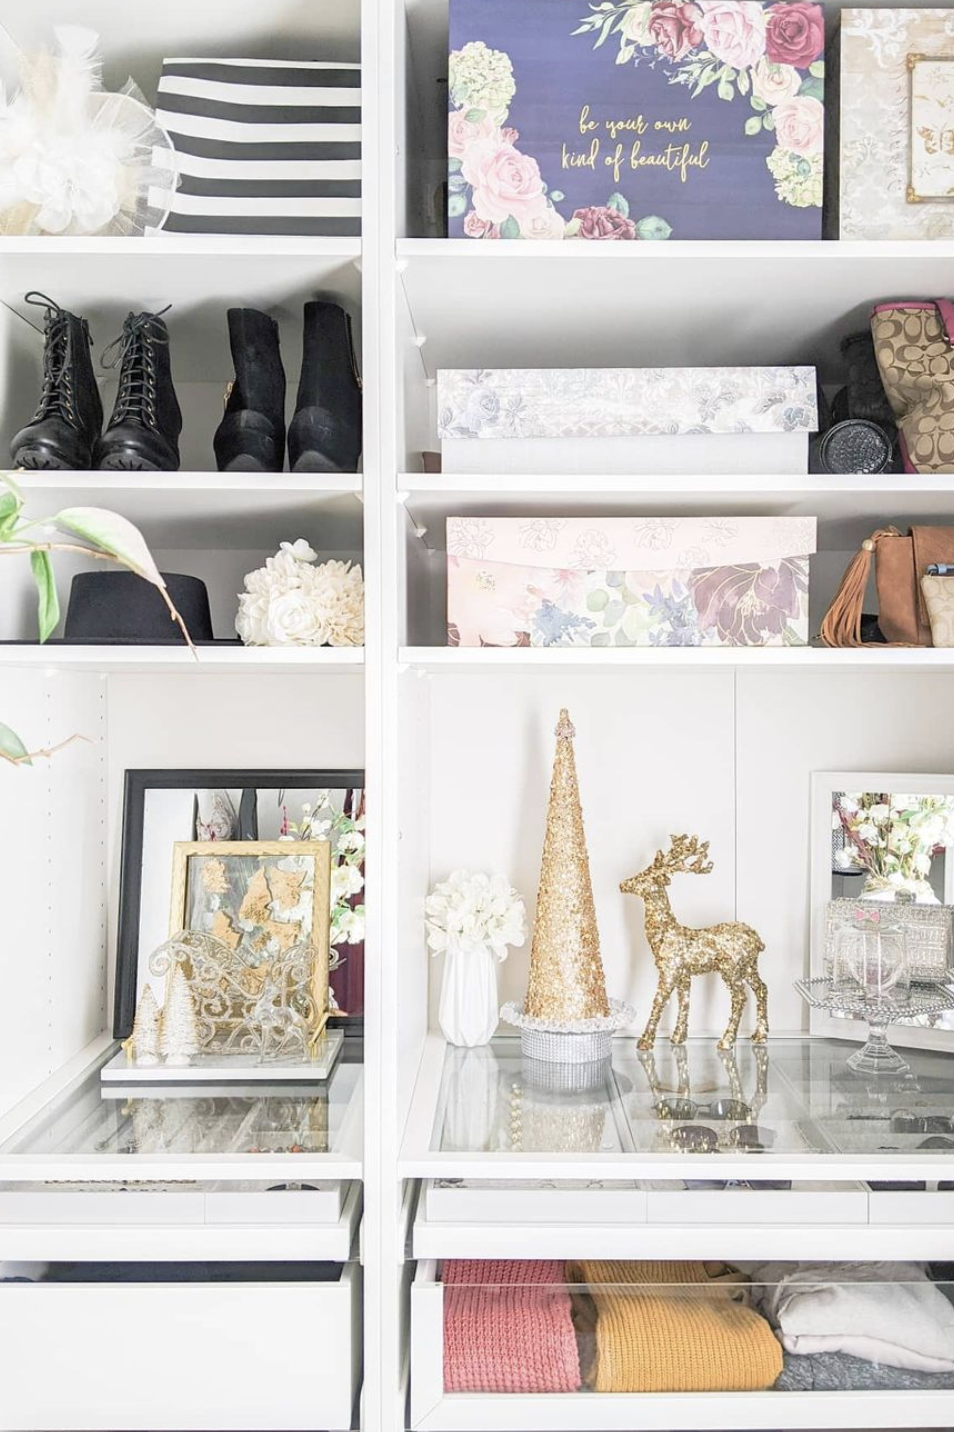 Best Way To Organize A Woman's Closet